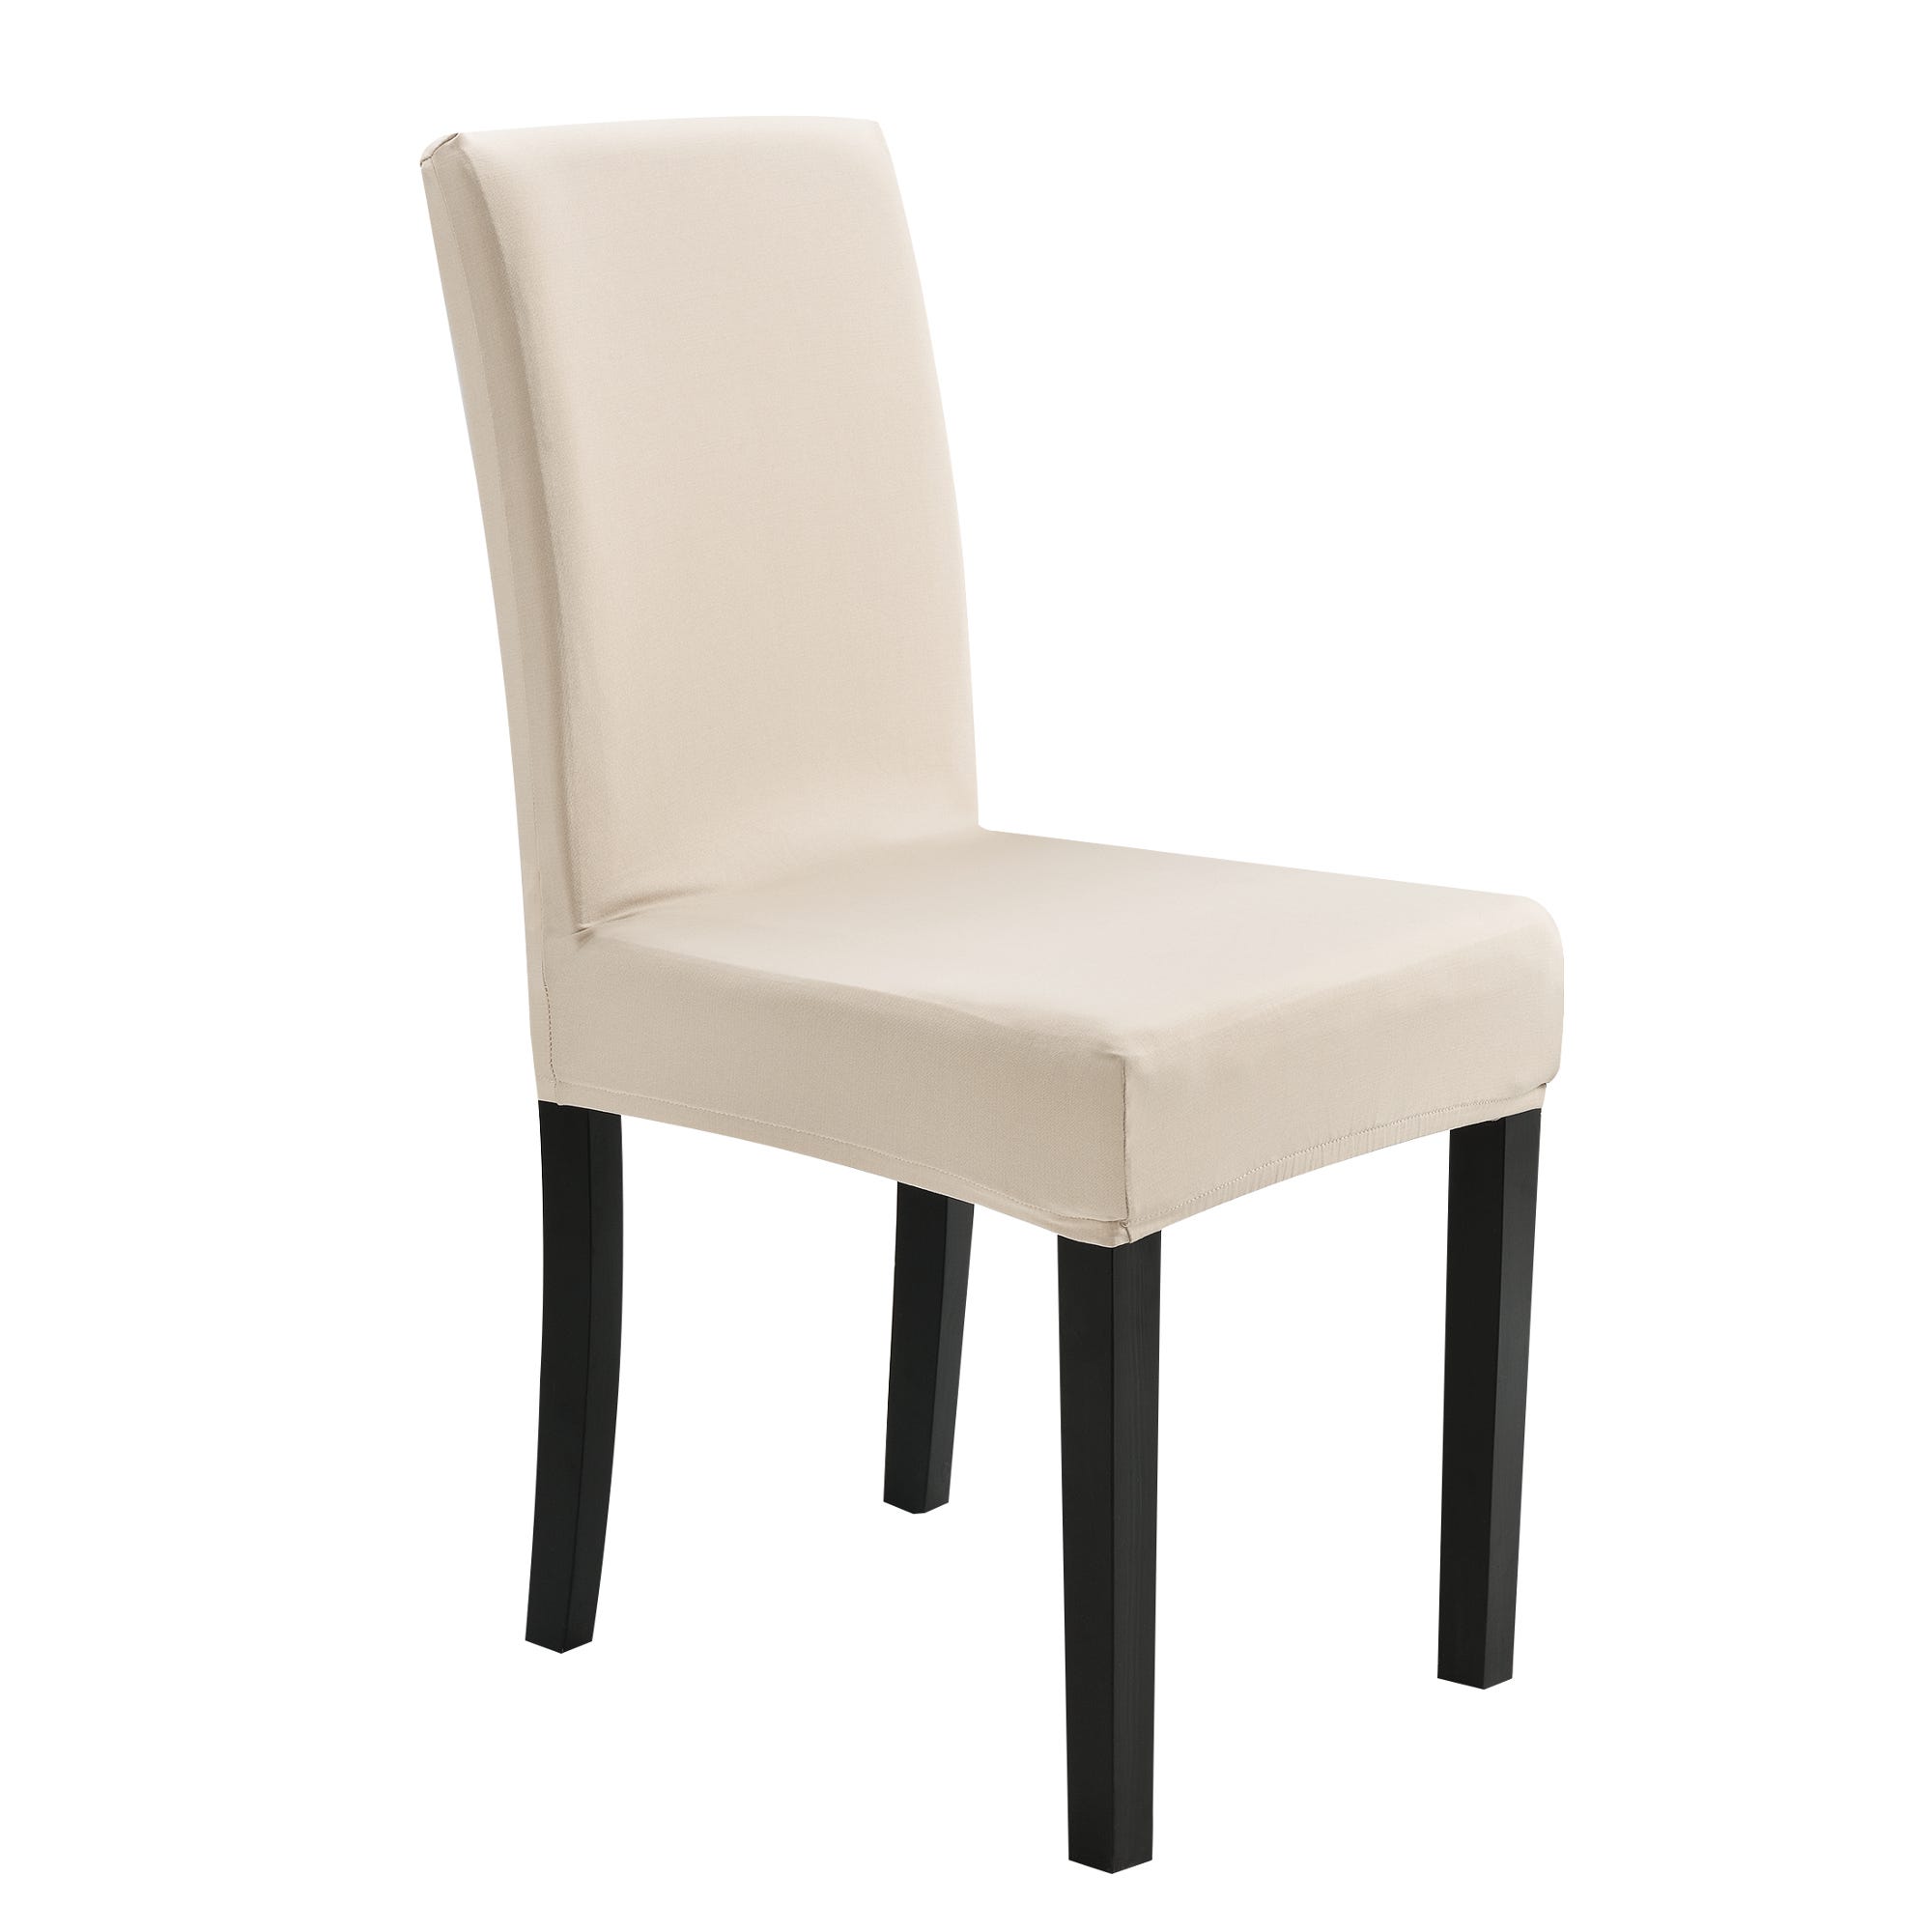 neu.haus] Fodera per sedie - Color sabbia - Elastico - per sedie in varie  misure